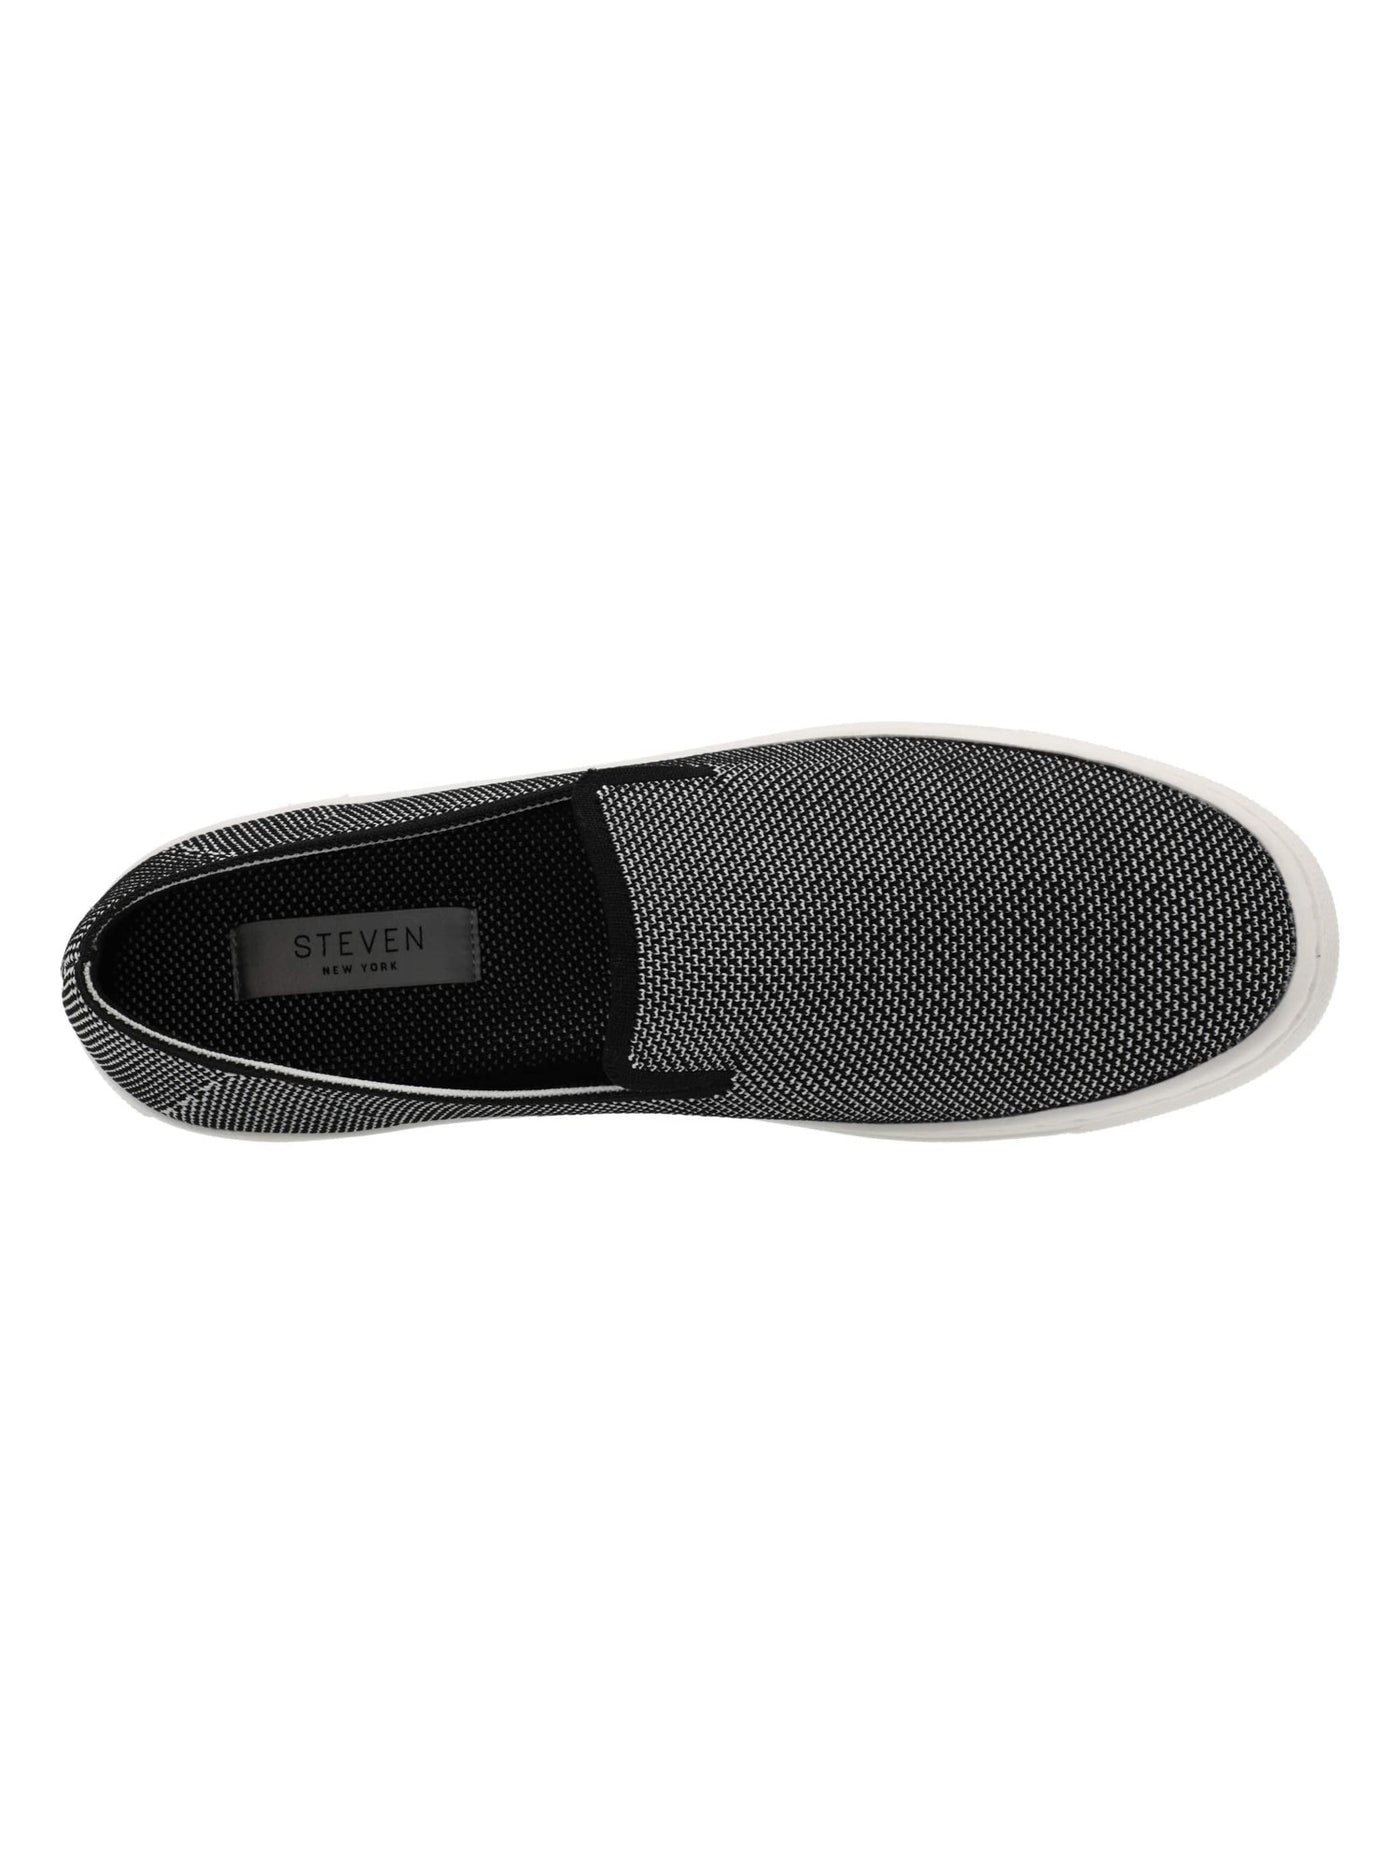 STEVEN Womens Black Patterned Cushioned Kraft Round Toe Platform Slip On Sneakers Shoes M